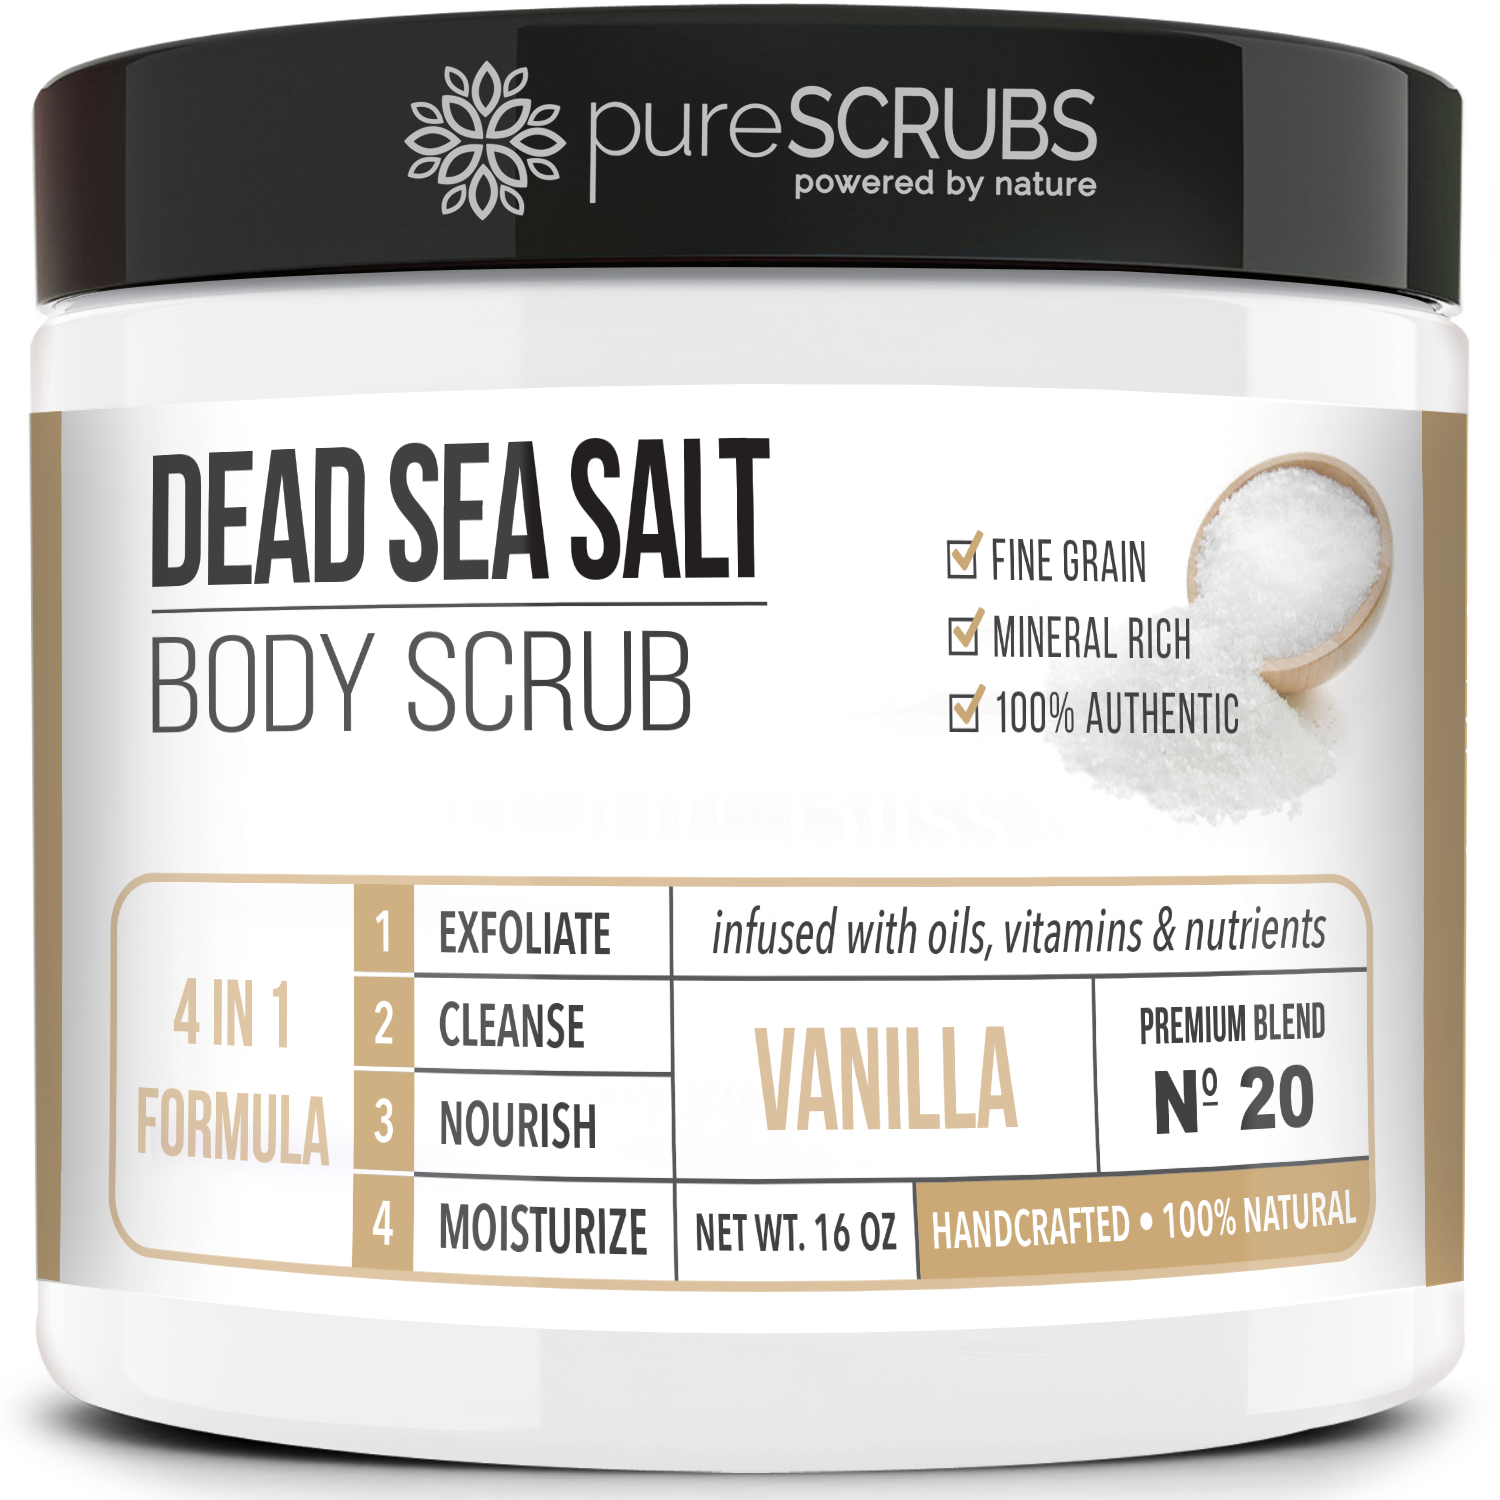 Vanilla Body Scrub / Dead Sea Salt / Premium Blend #20